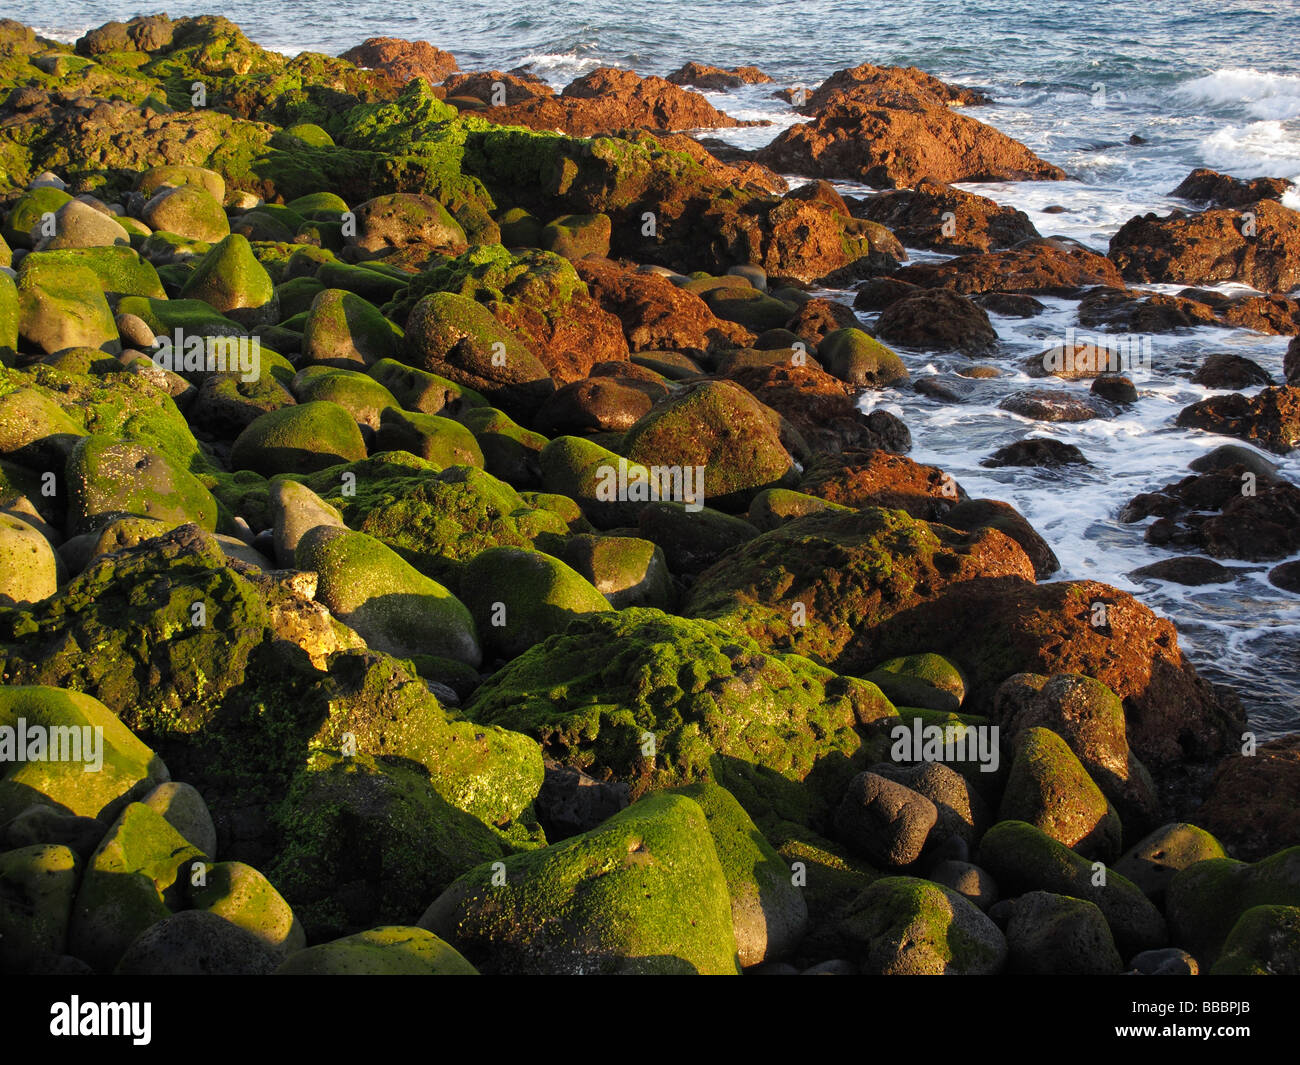 Algae-covered stones in the sea, La Palma, Canary Islands, Spain Stock Photo